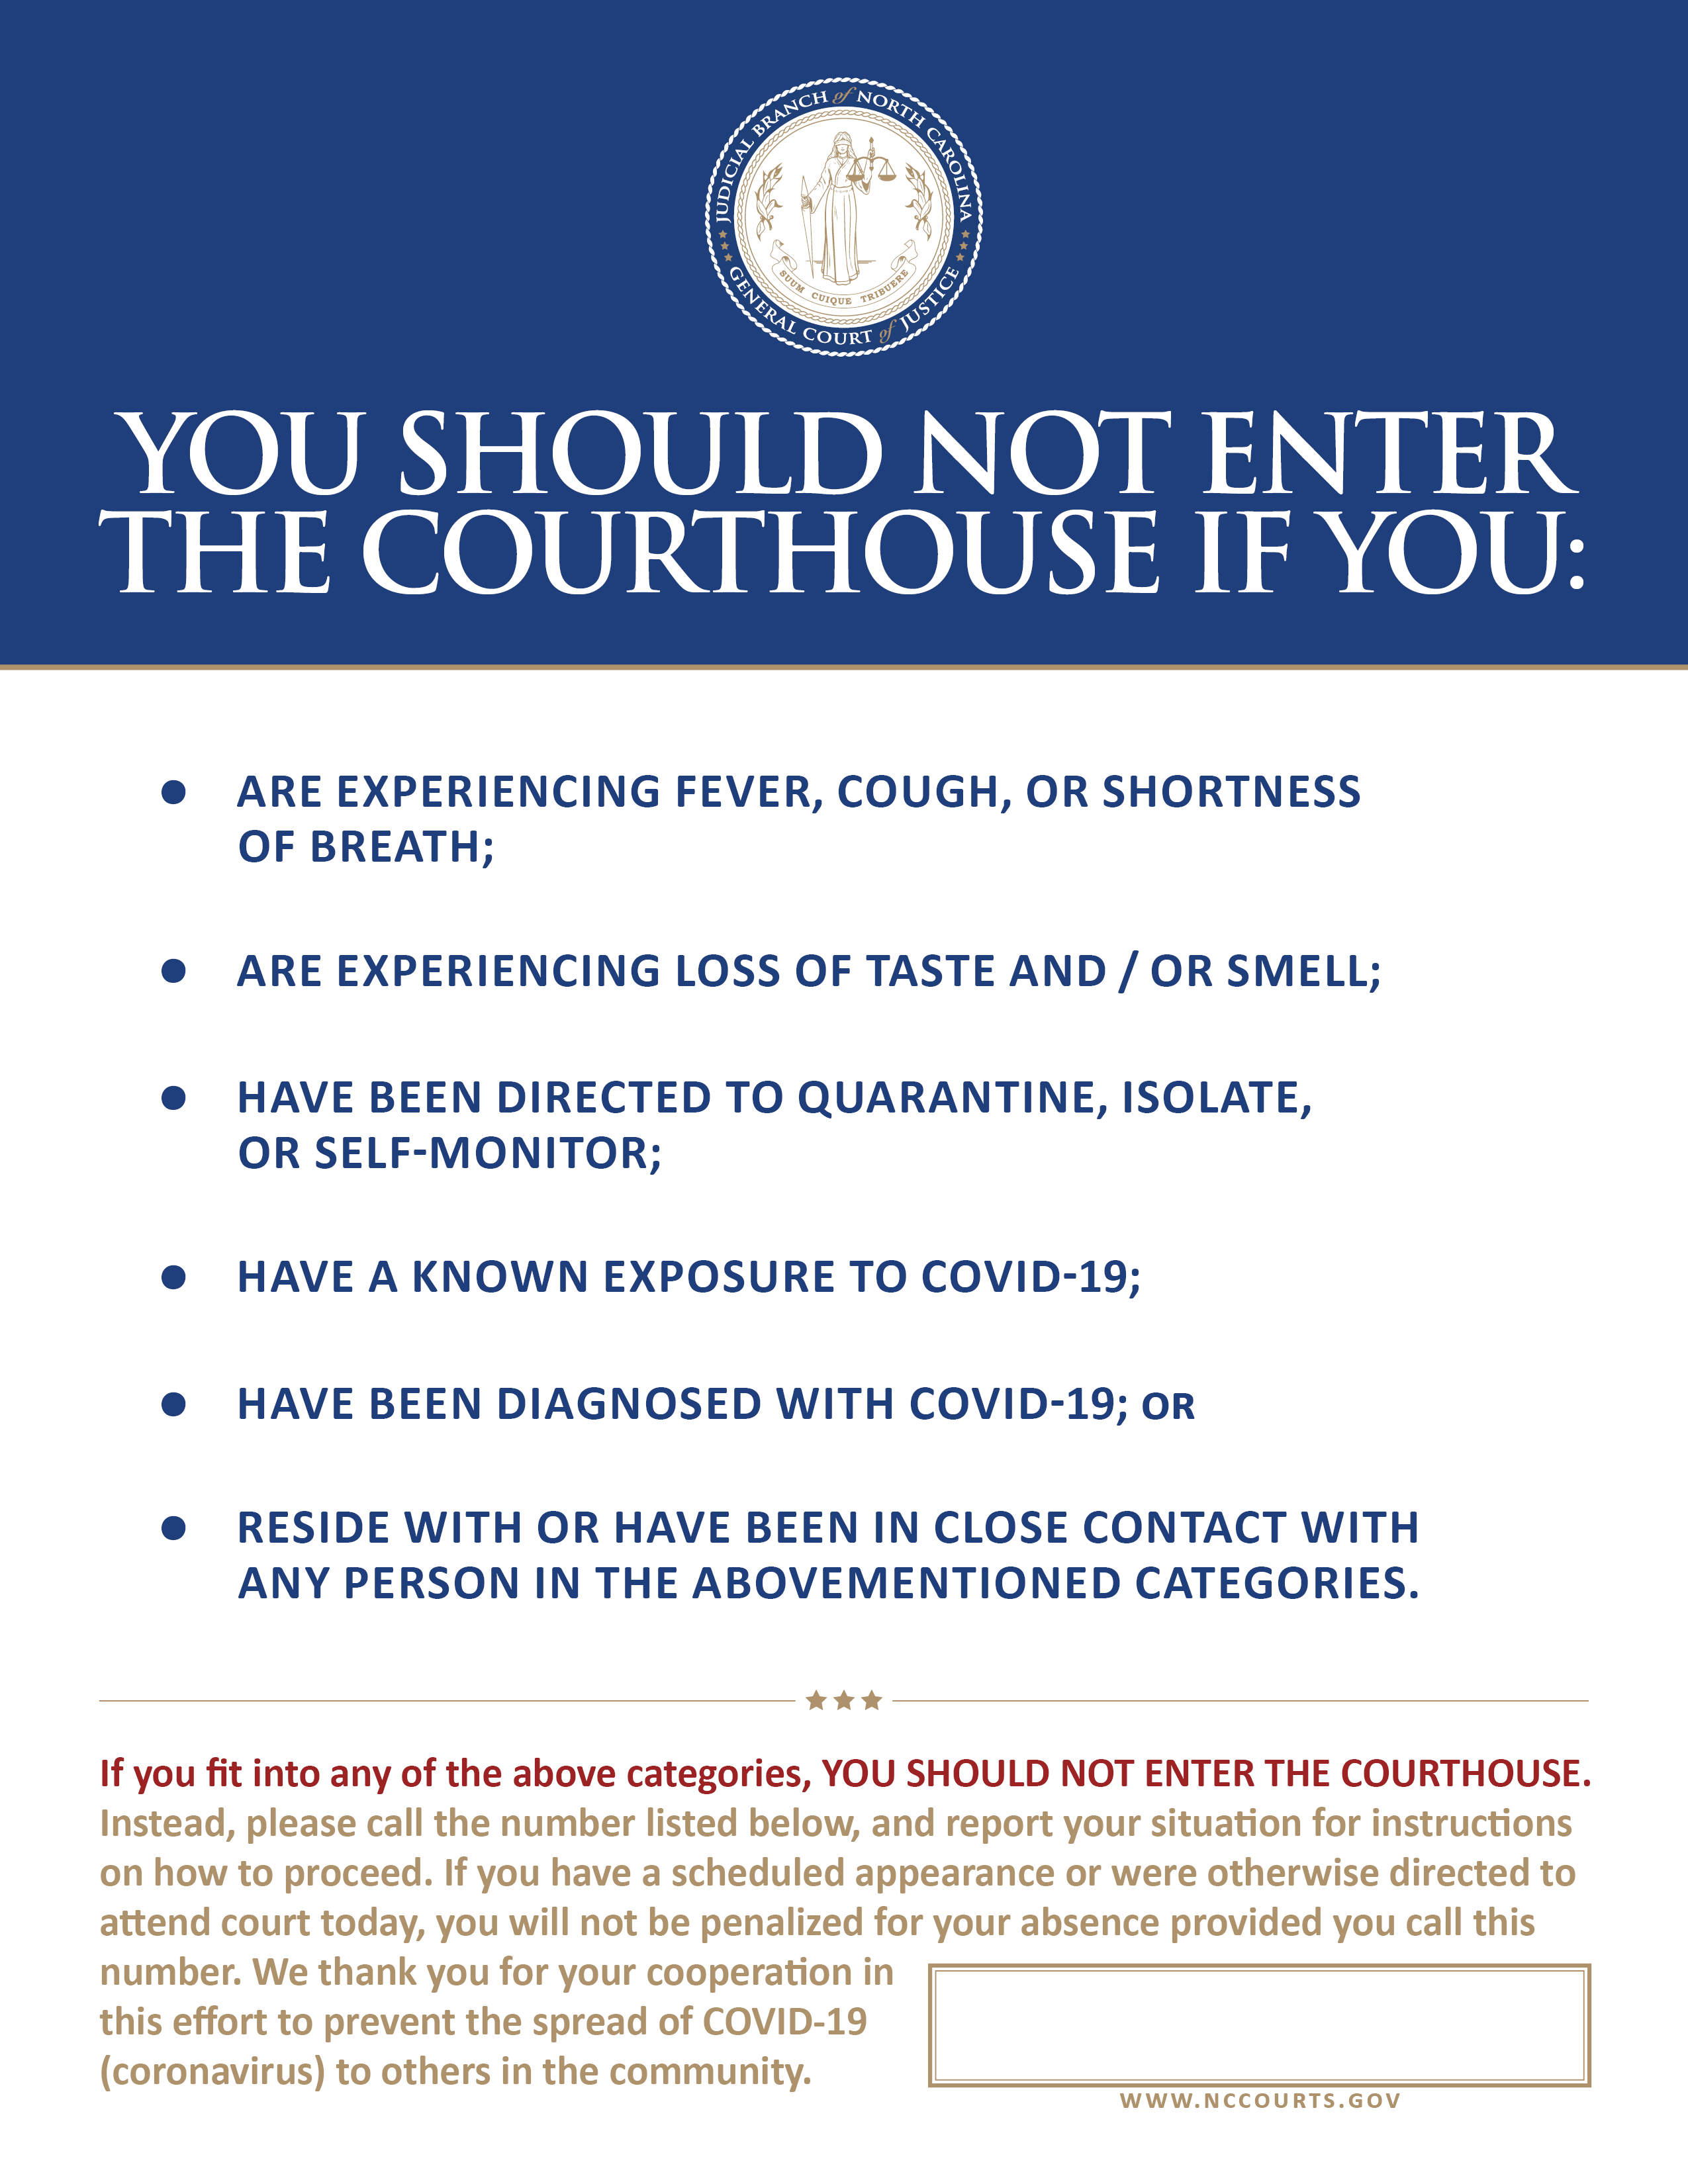 Do Not Enter Courthouse